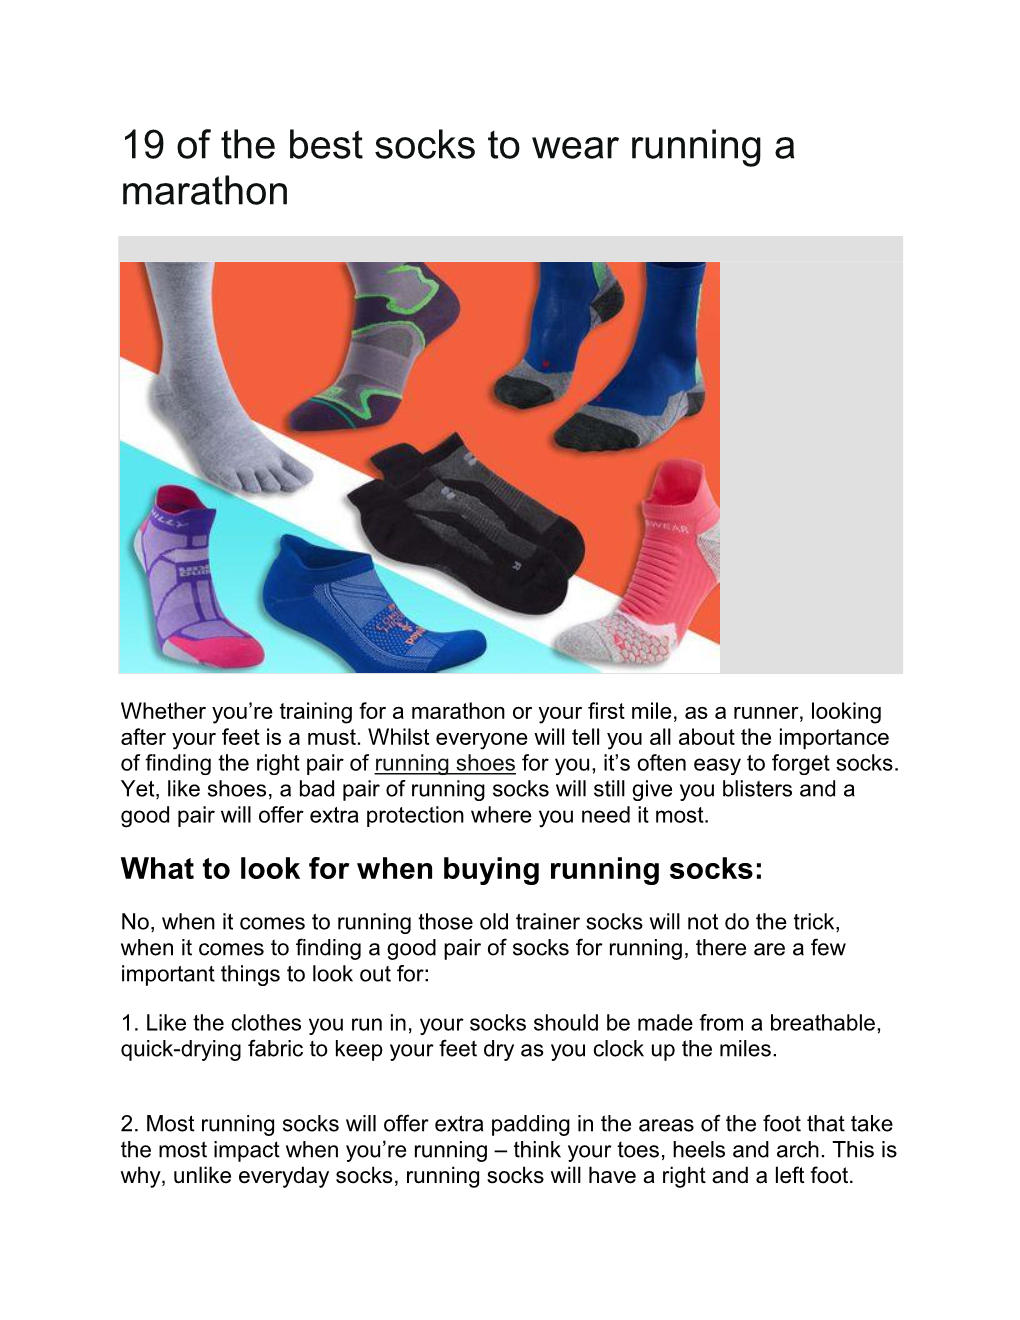 19 of the Best Socks to Wear Running a Marathon